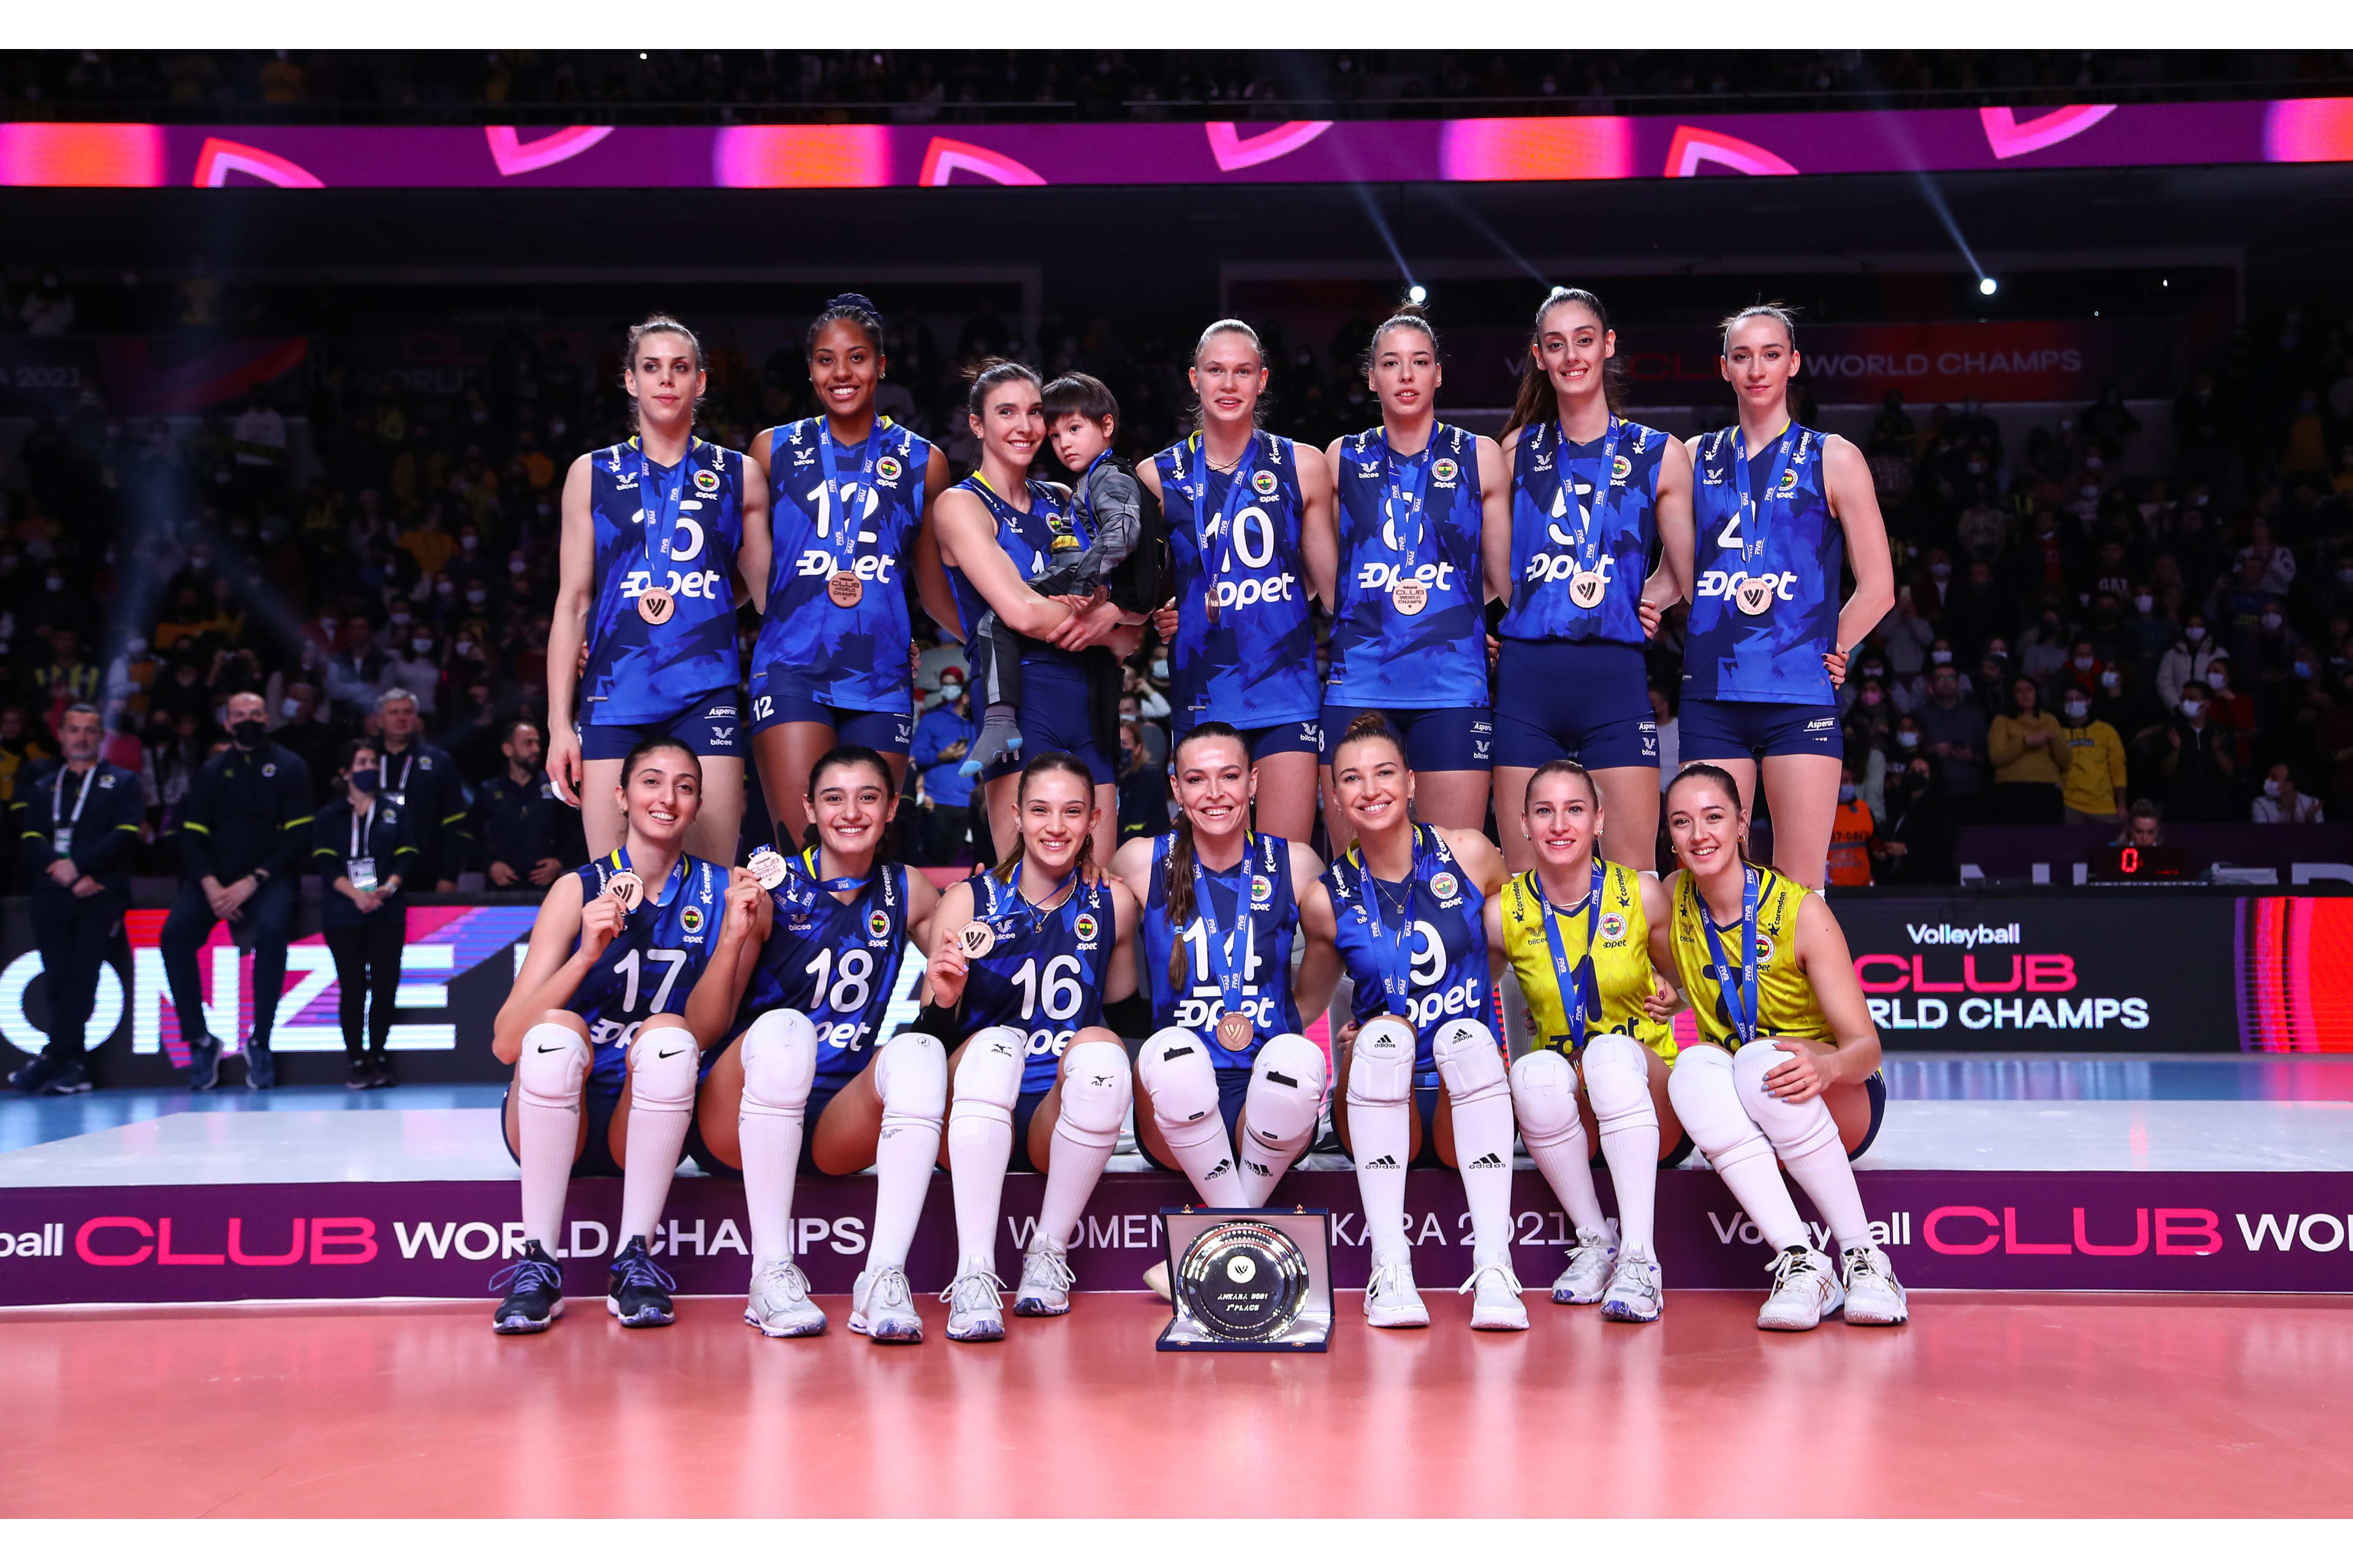 Womens Club World Championship 2021 volleyballworld